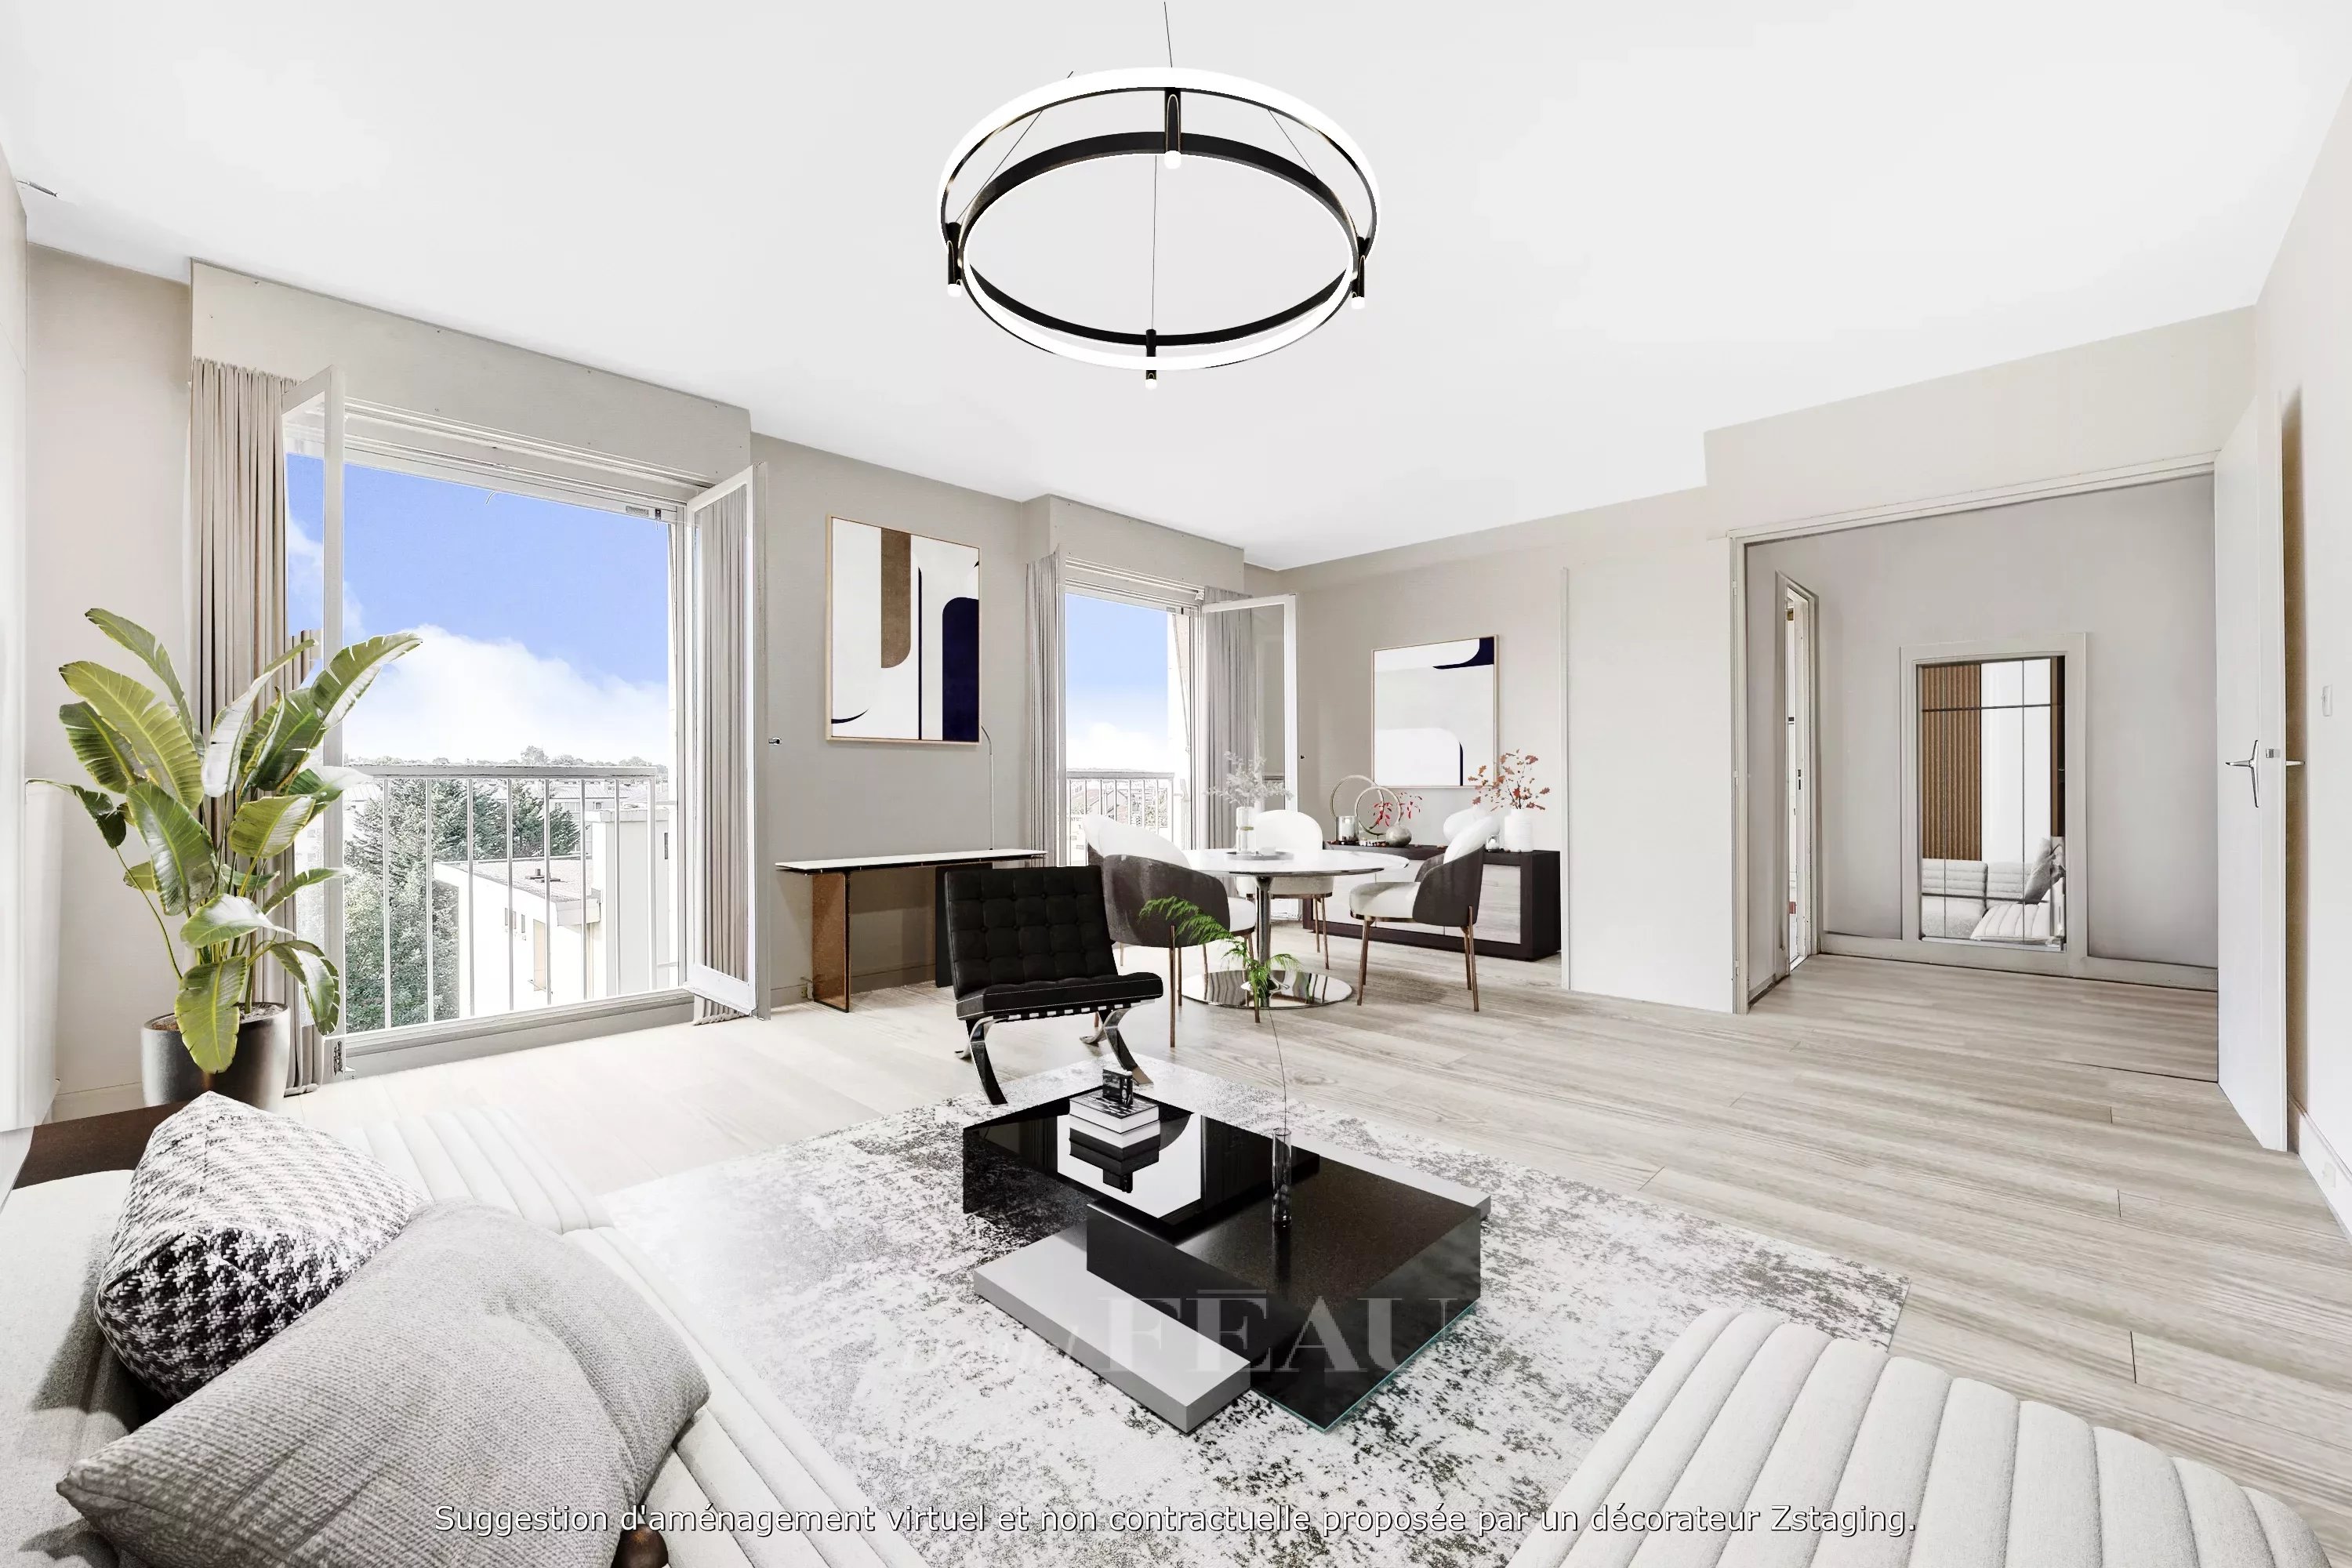 Versailles Clagny – A 4/5 room duplex apartment with a superb terrace